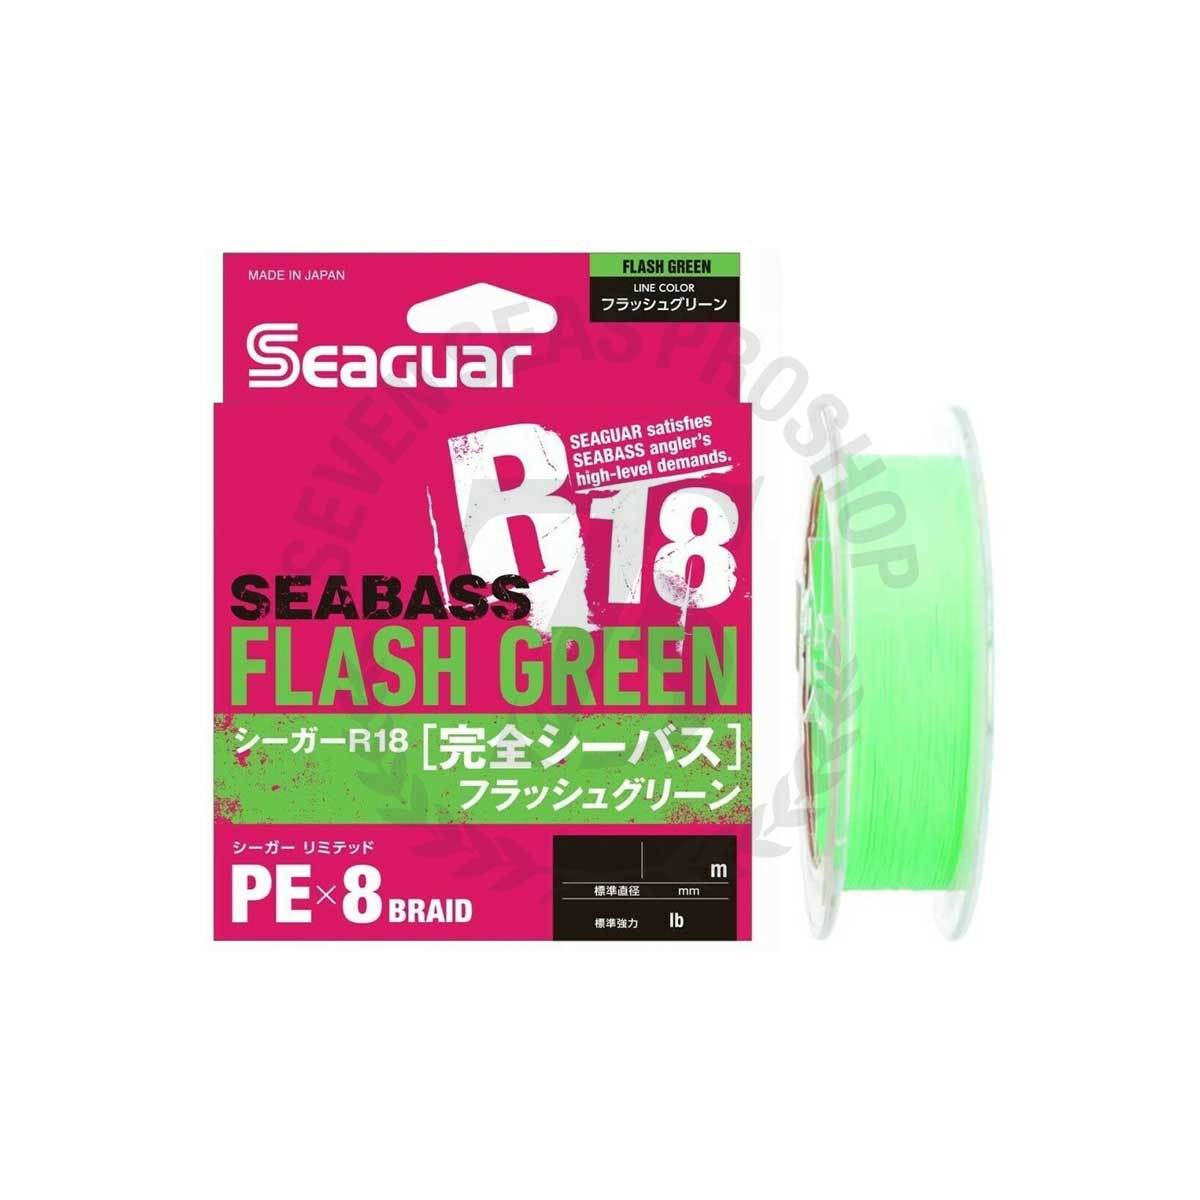 Seaguar R18 Seabass Flash Green PE X8 Braid 150m #PE-1.2 (Flash  Green)*สายพีอี - 7 SEAS PROSHOP (THAILAND)